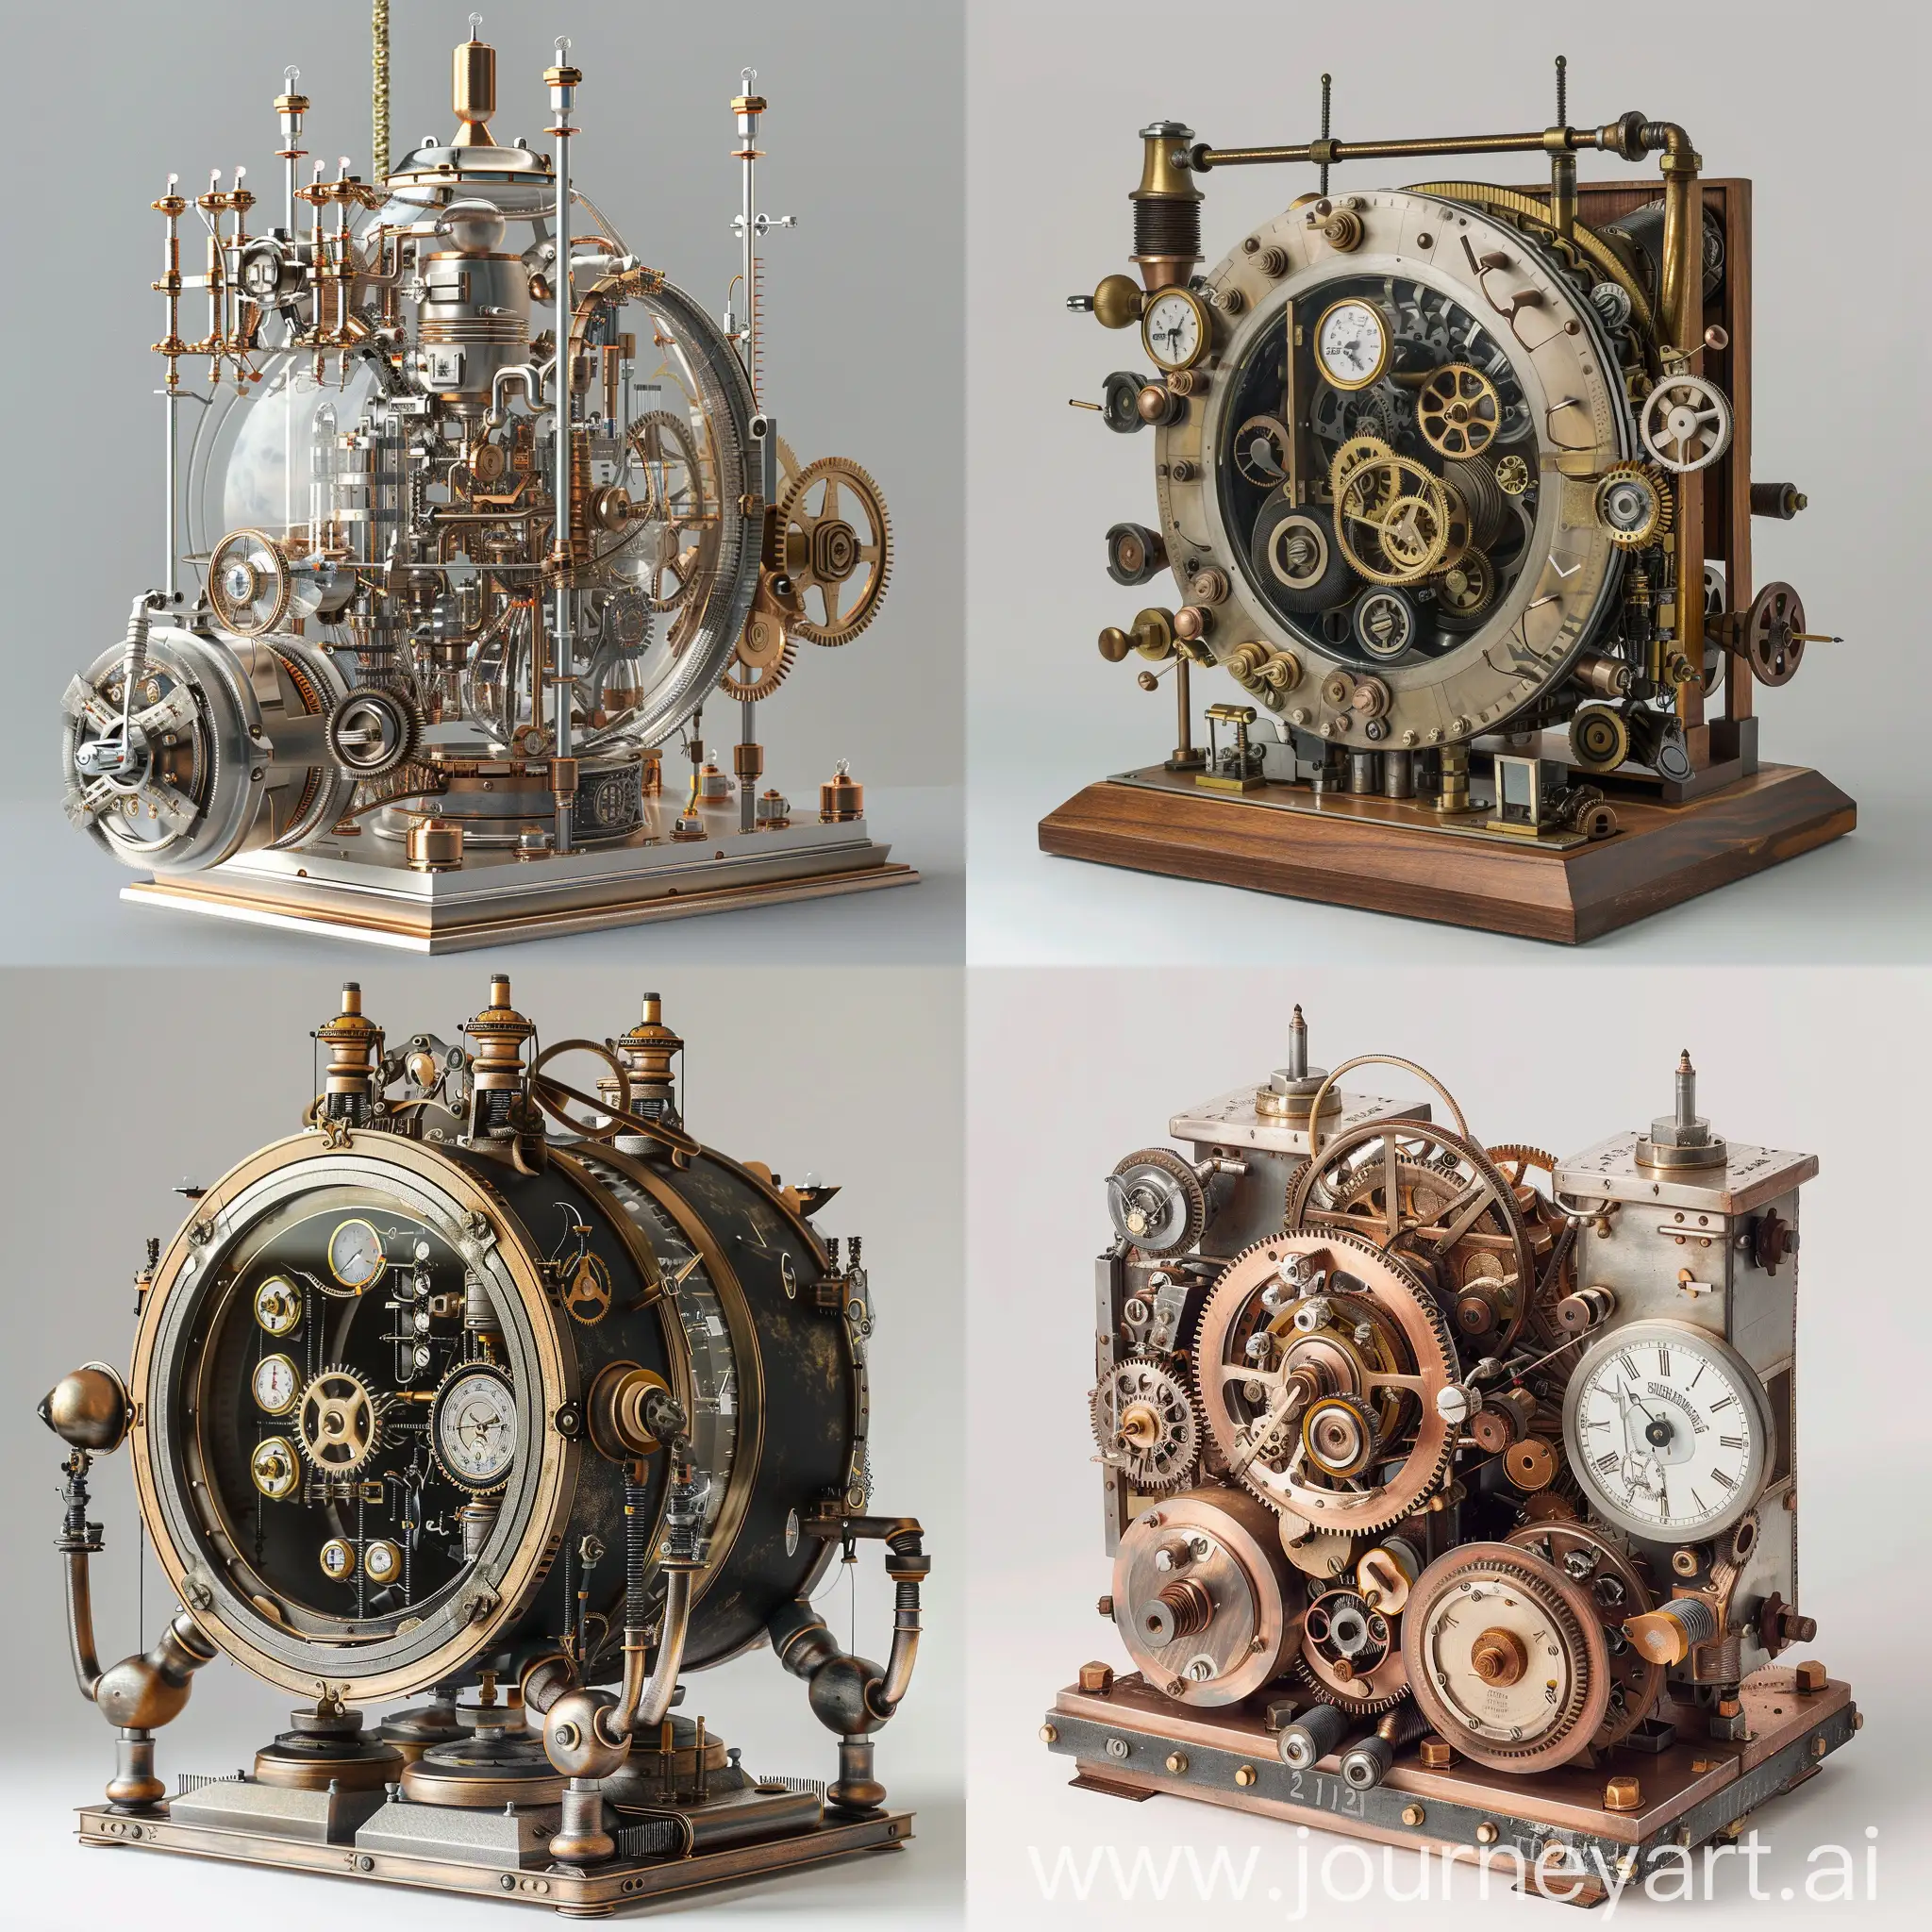 Intricate-Time-Machine-with-Futuristic-Mechanics